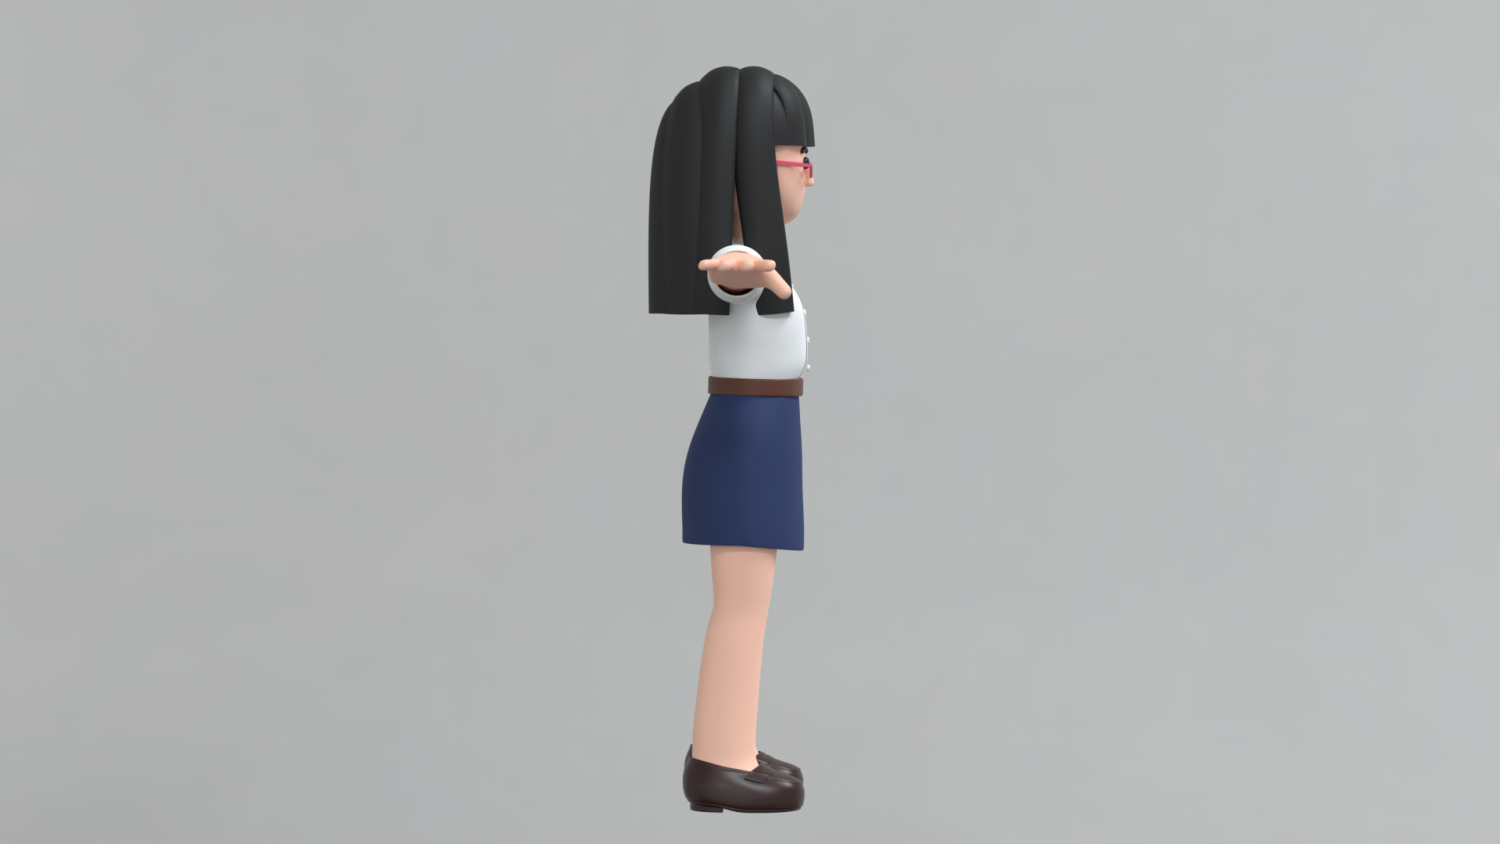 Sarada uchiha 3D Model in Fantasy 3DExport